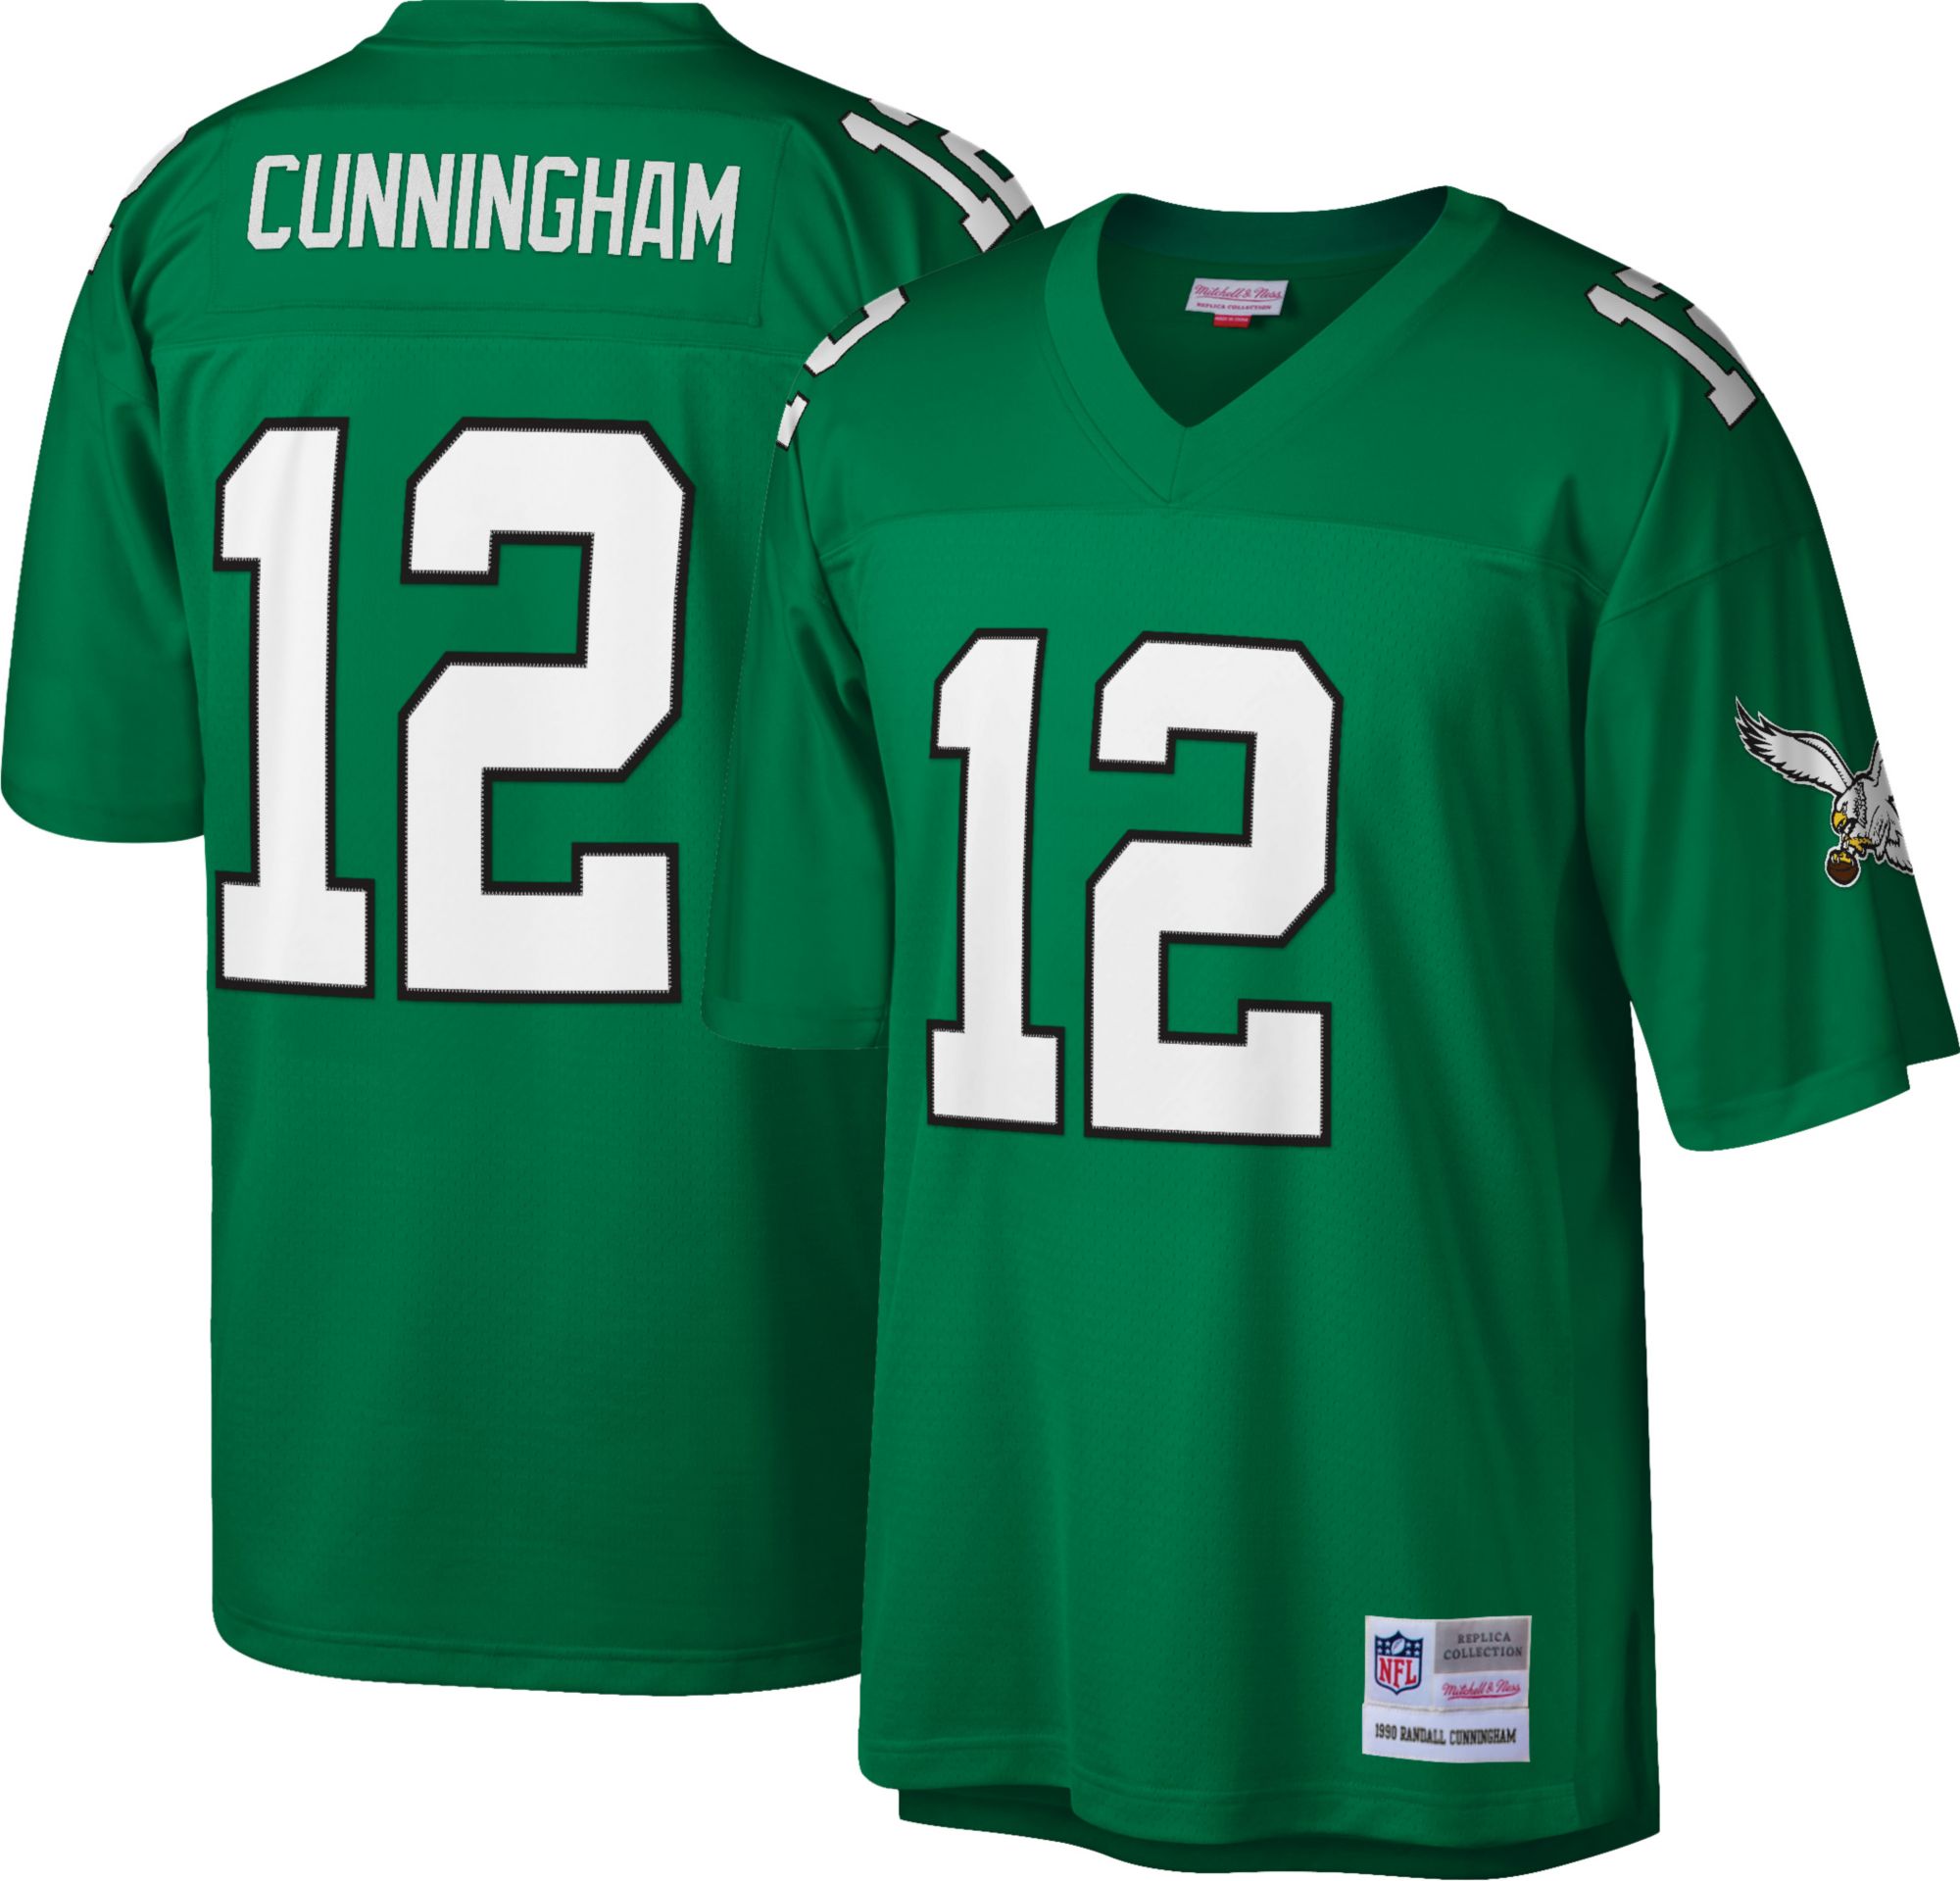 Dick Cunningham replica jersey